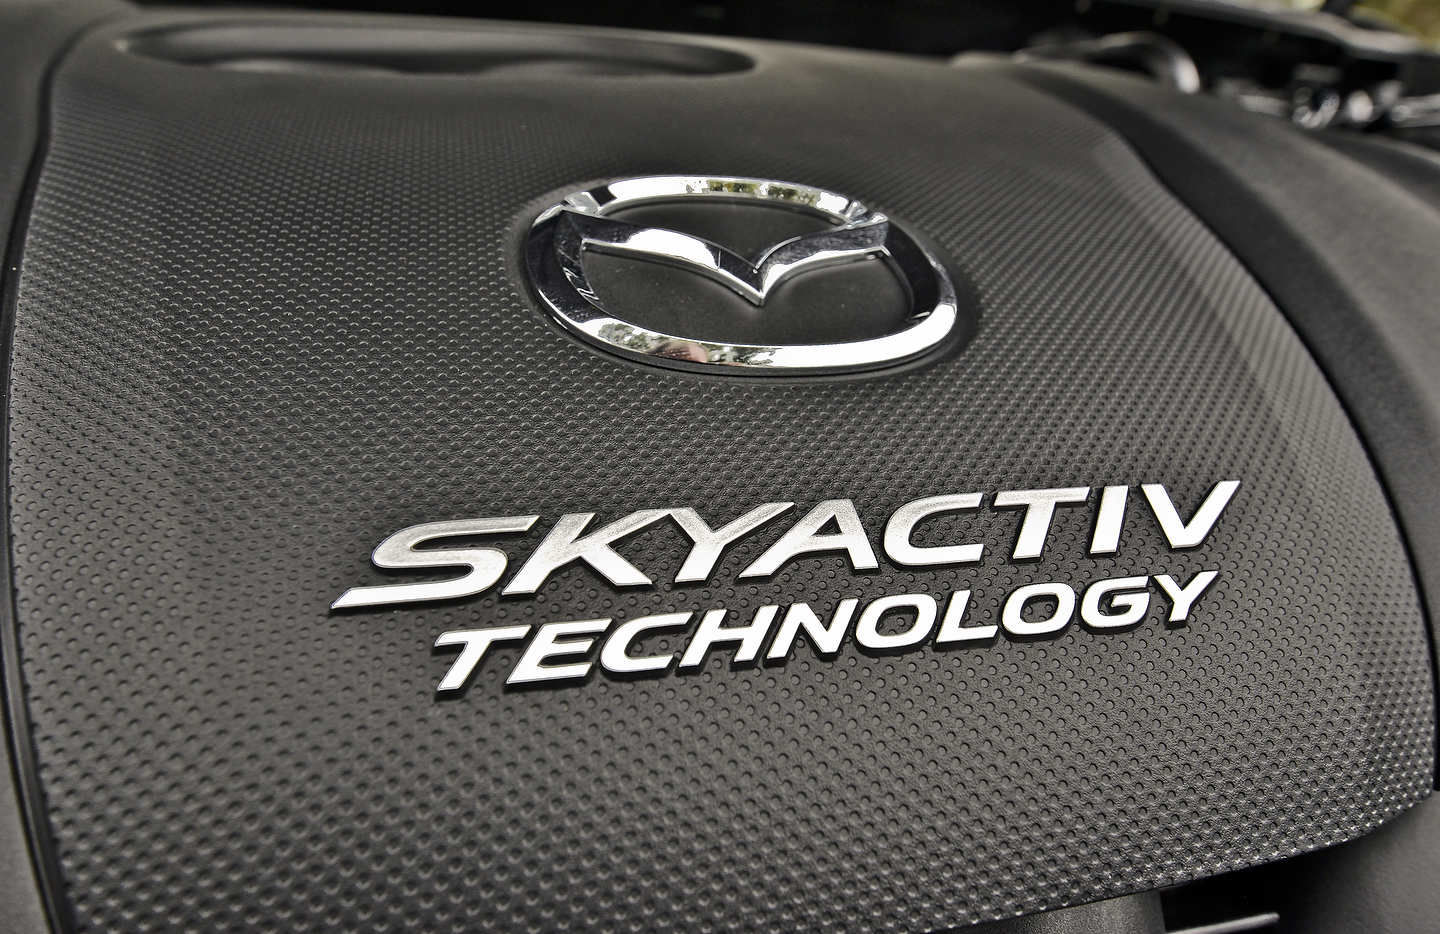 Three ways that SKYACTIV technology helps improve Mazda fuel economy